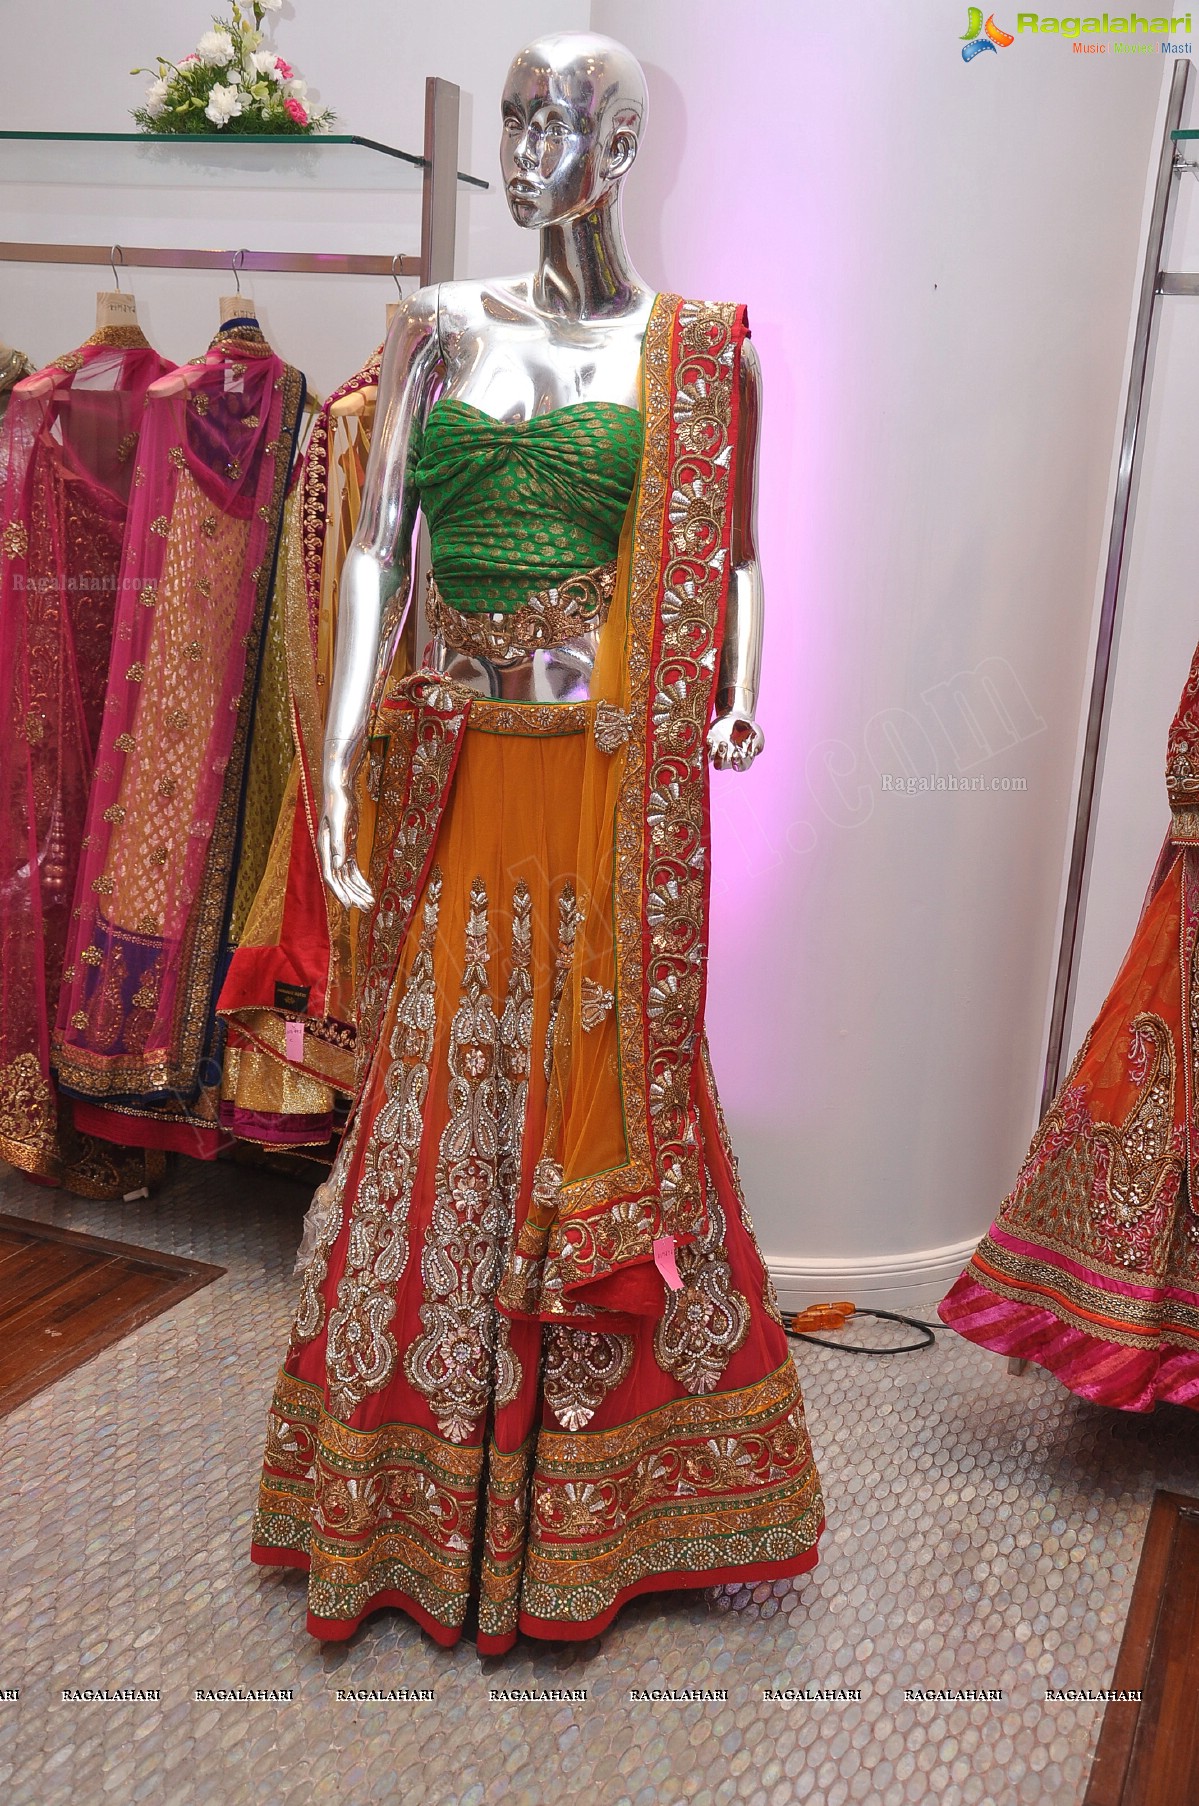 Pinky Reddy launches Kimaya Fashions, Hyderabad